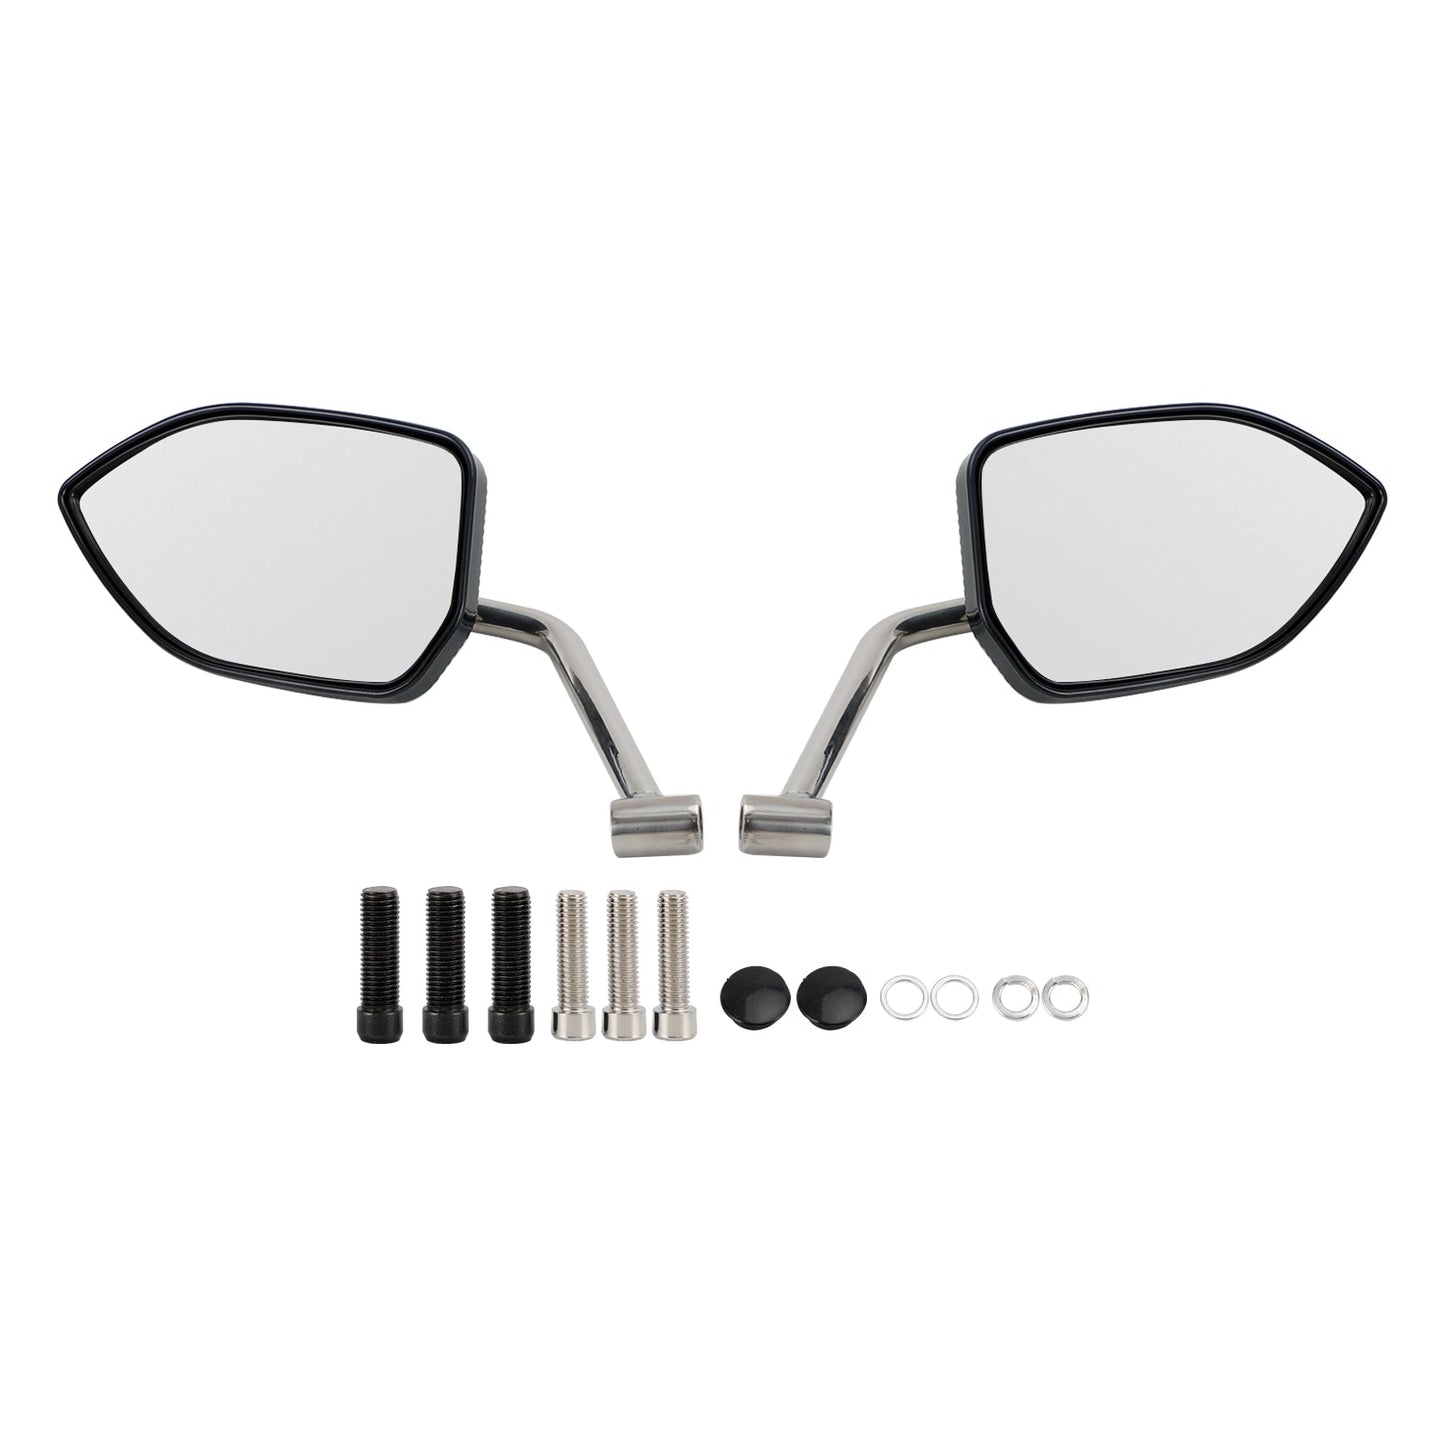 Motorbike Trike Wing Mirrors 10mm thread - High Quality - Black -Pair -Big View